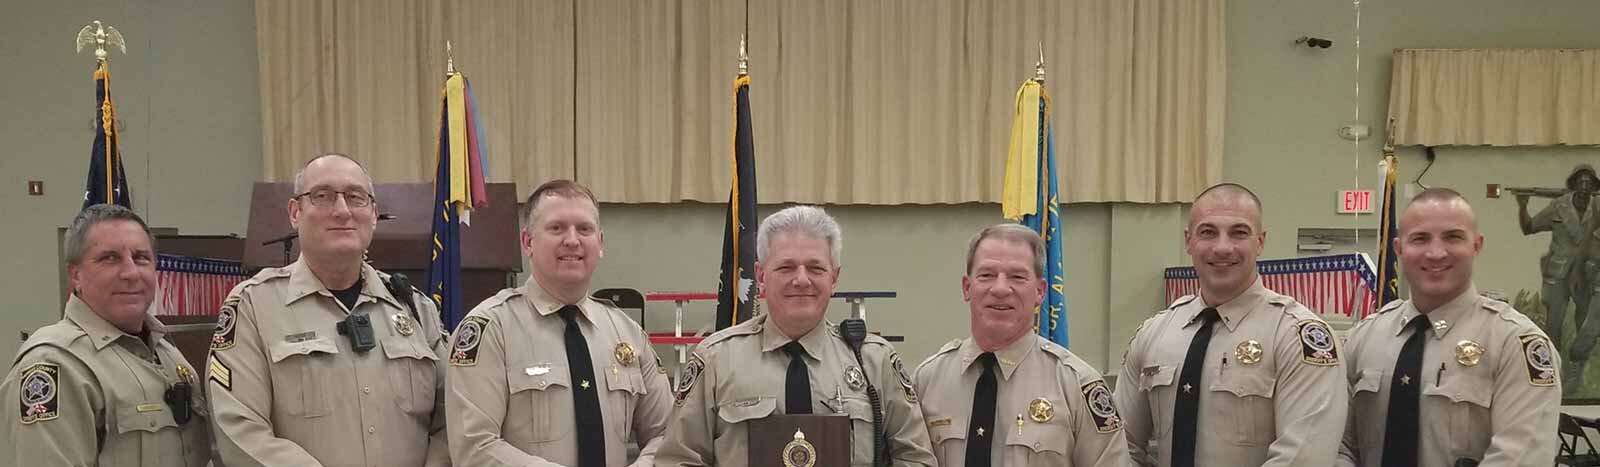 Morgan County Sheriff staff